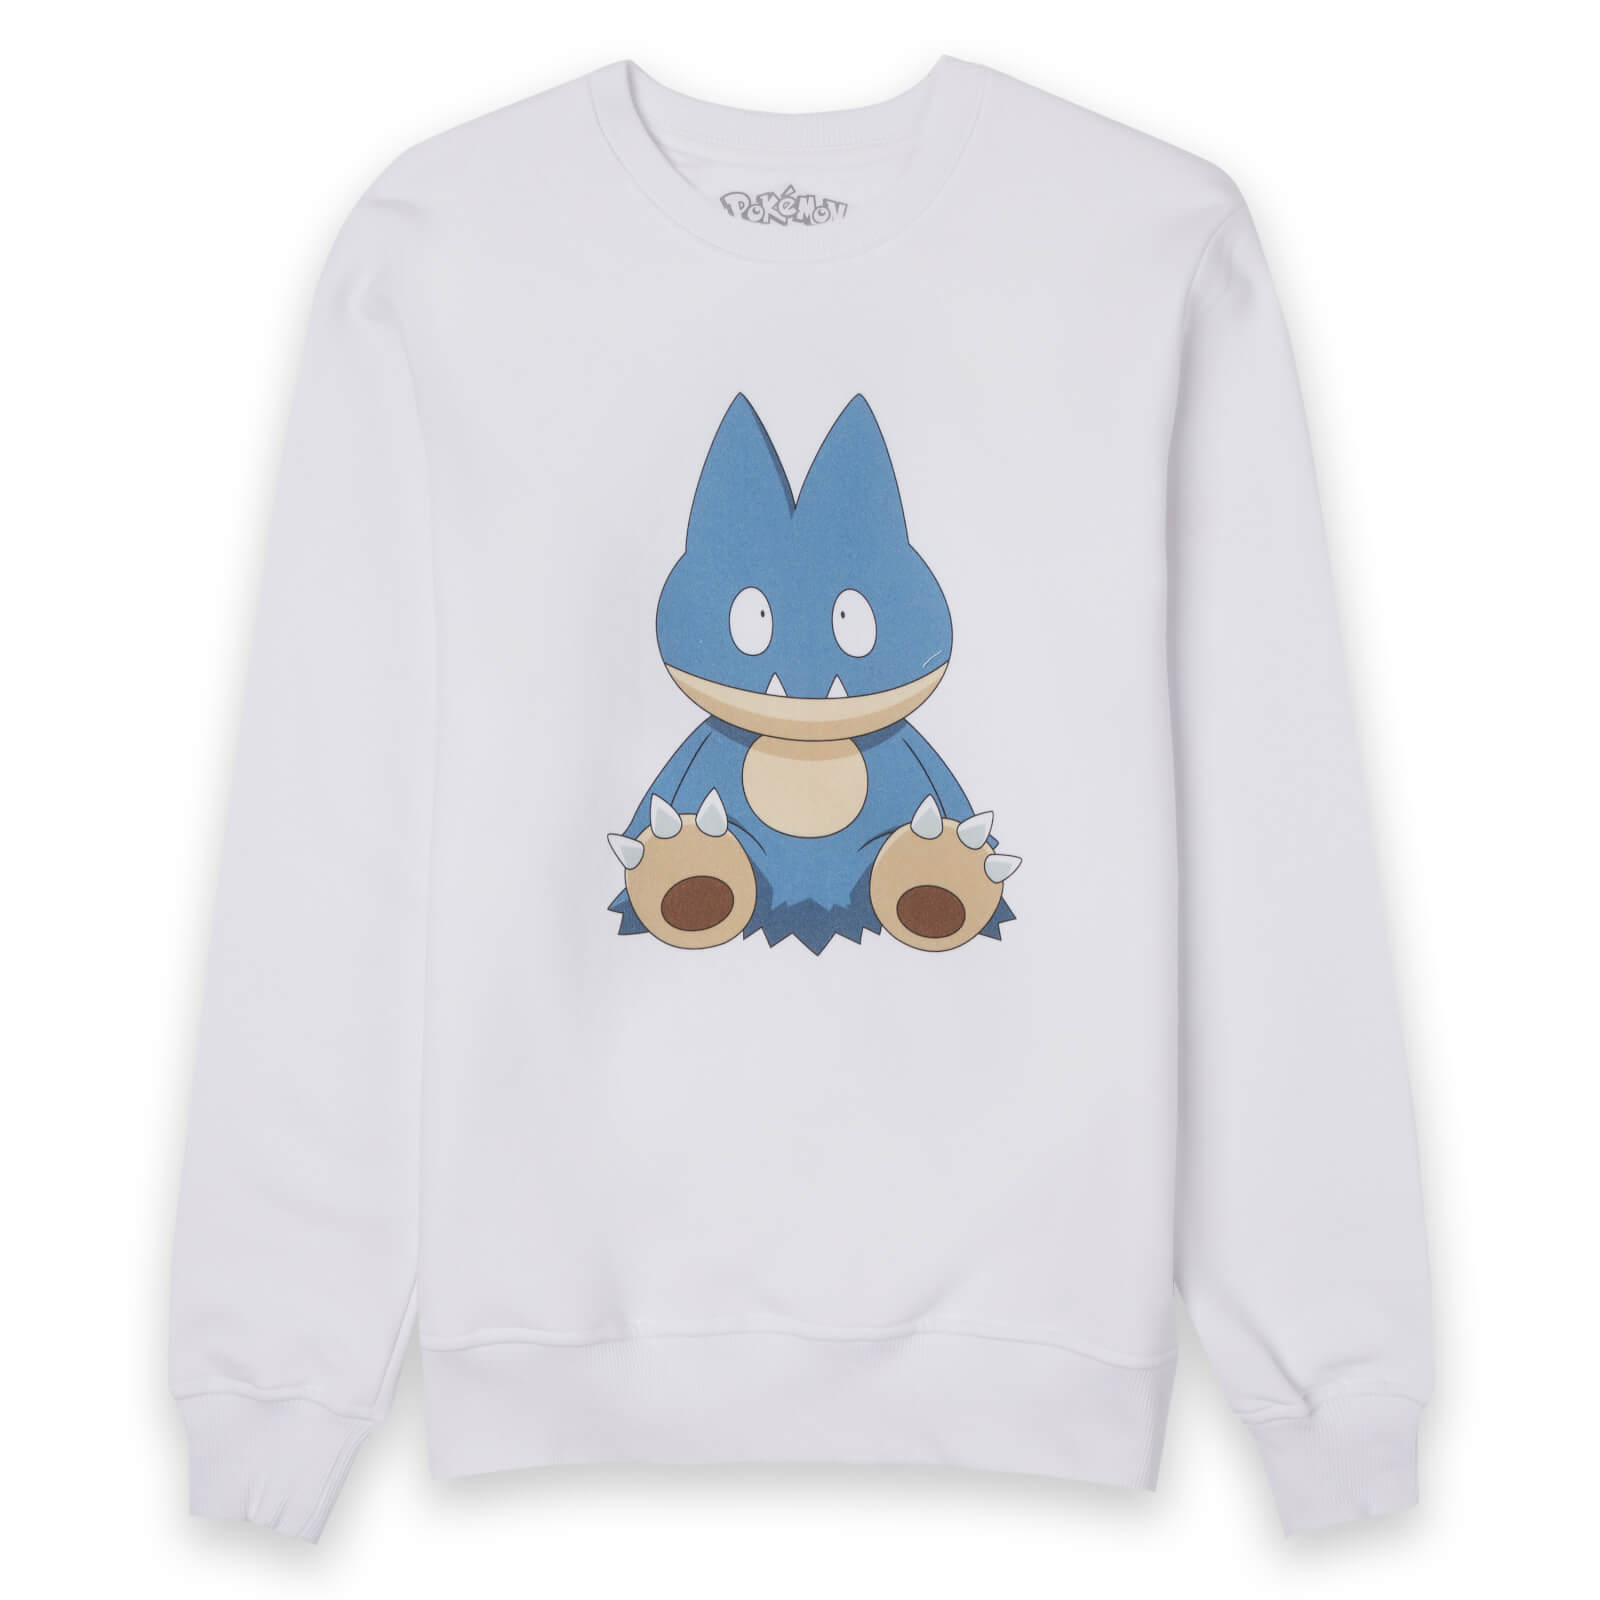 Pokémon Munchlax Unisex Sweatshirt - White - M - White